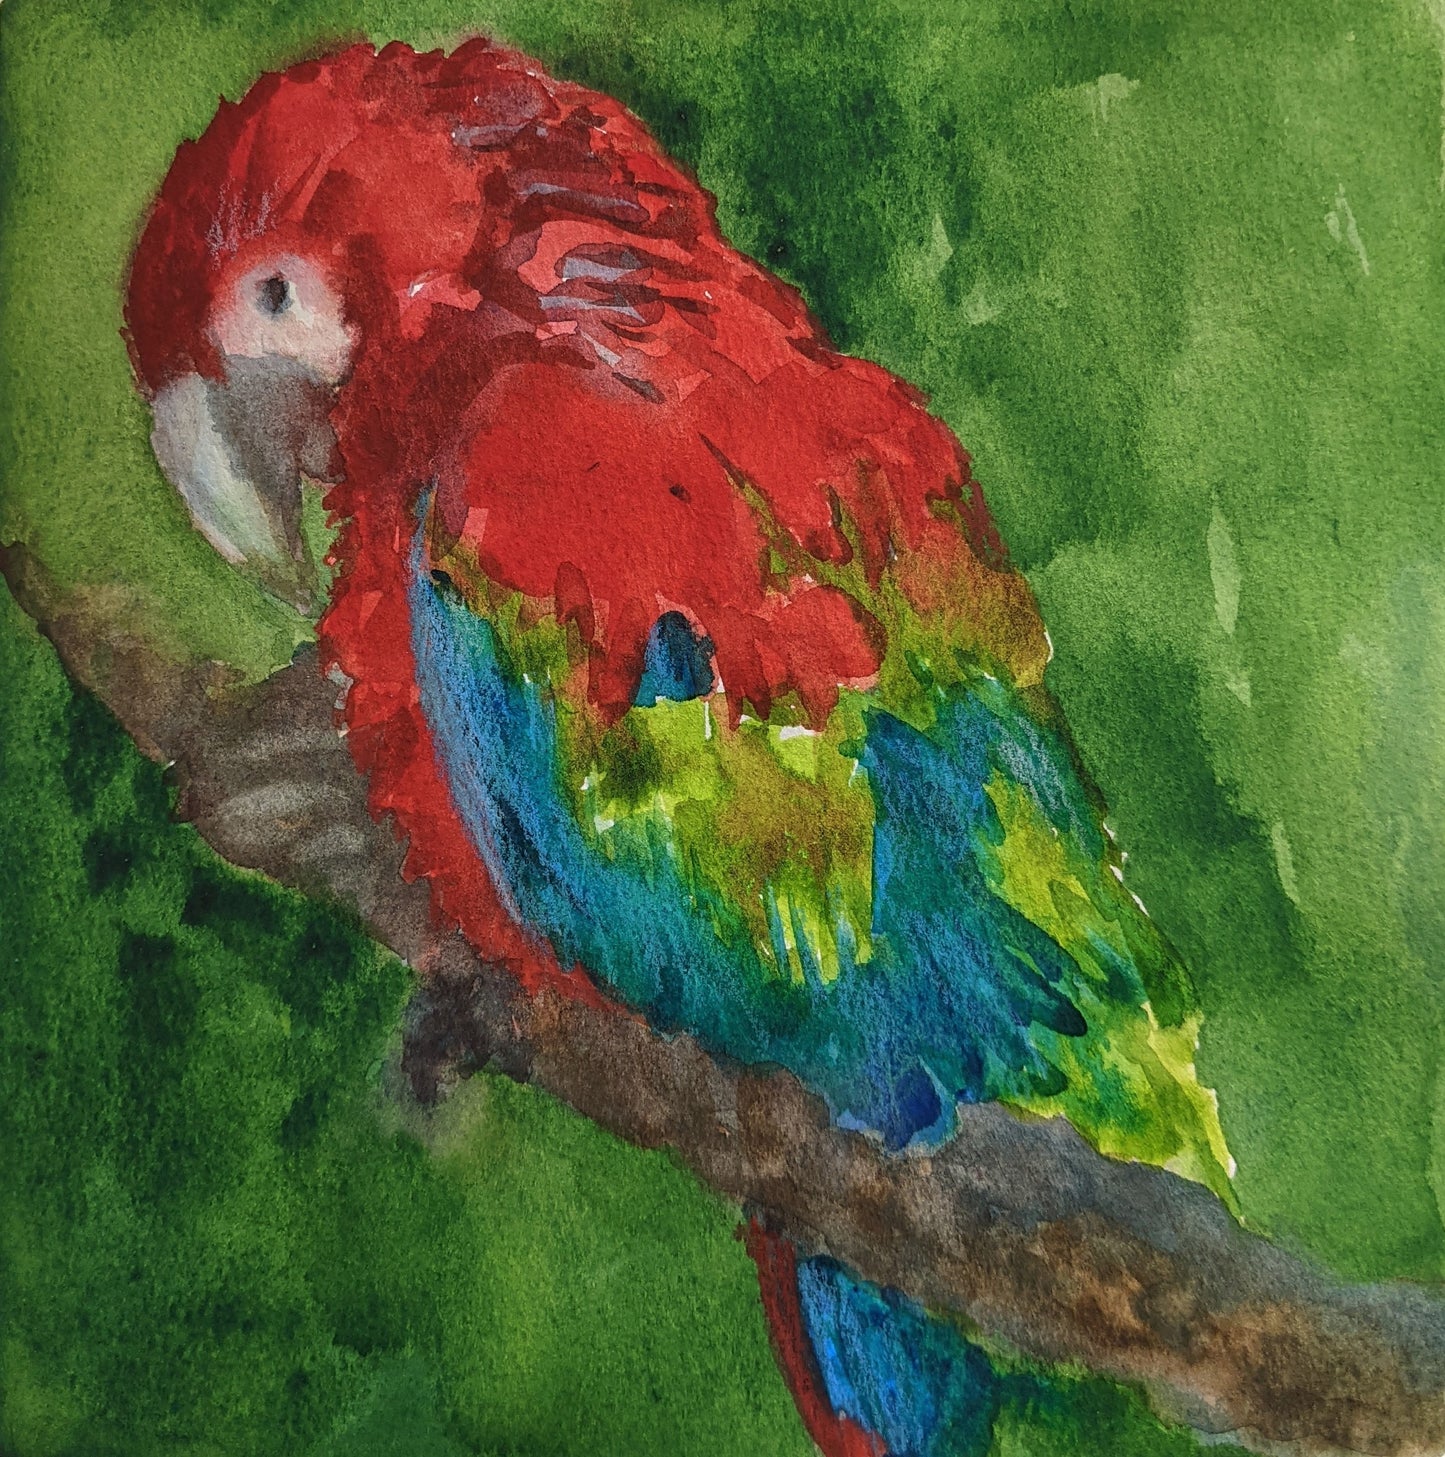 Parrot Splash watercolor painting on paper detail